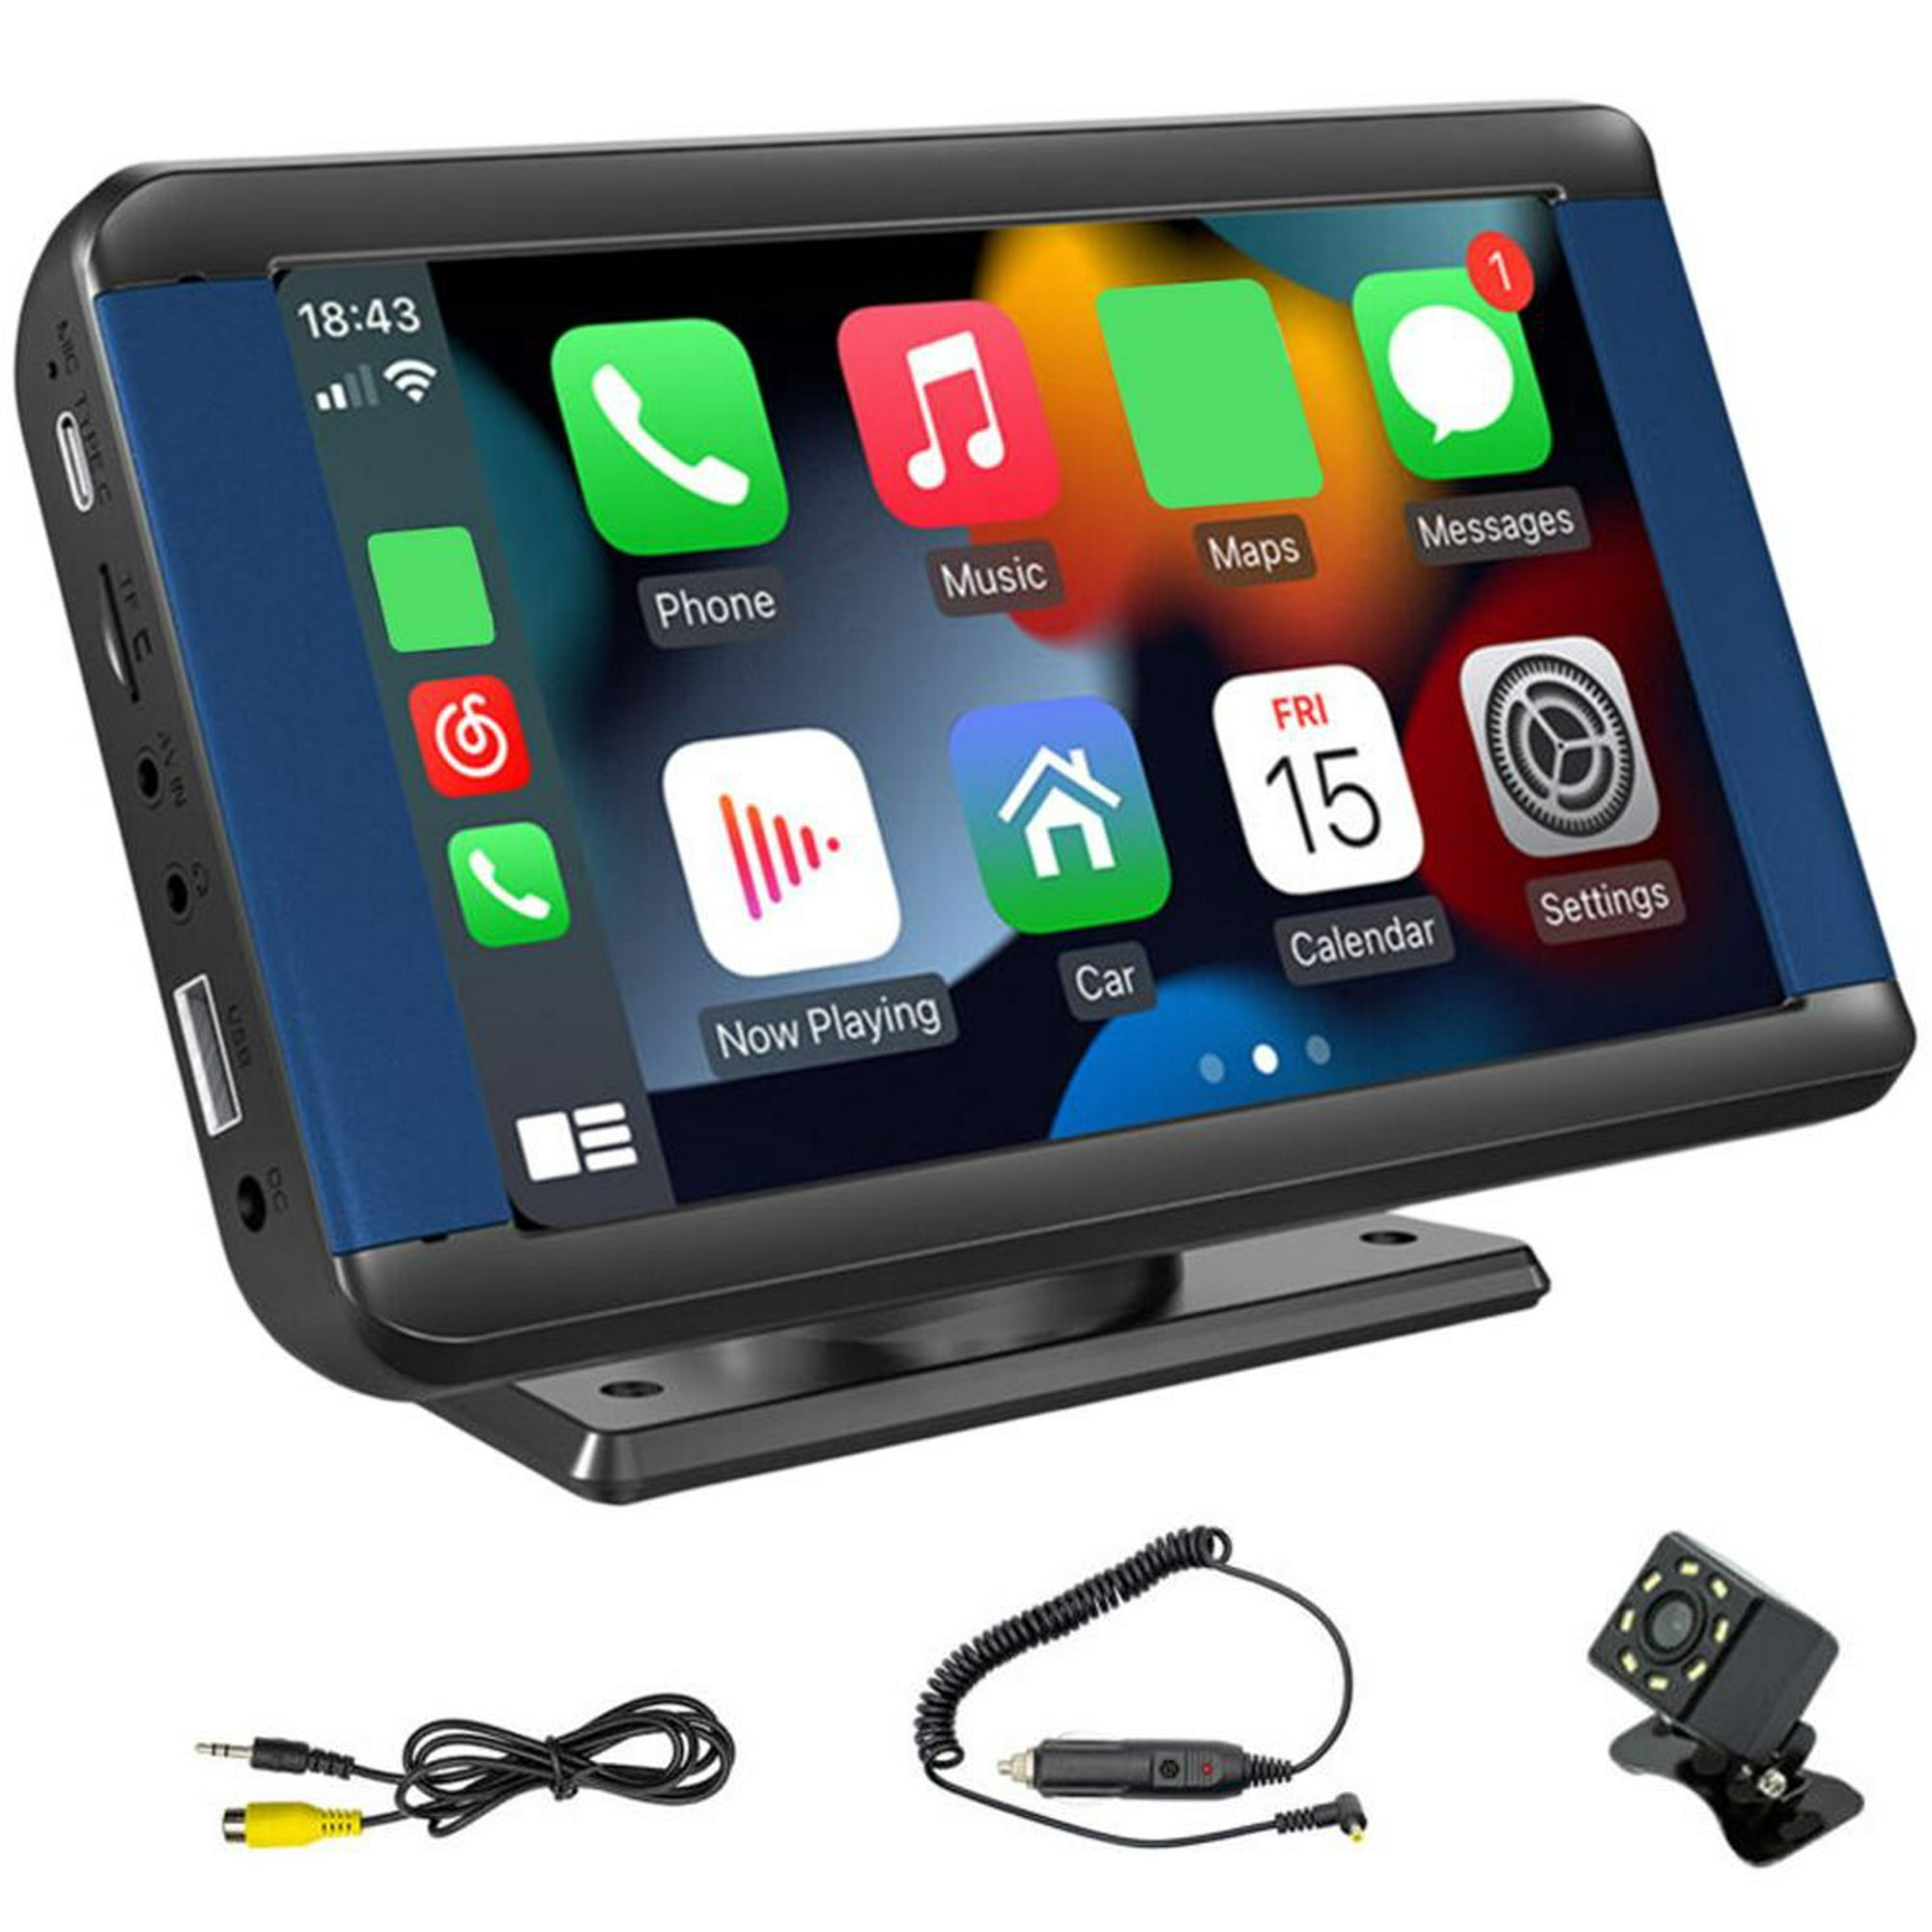 Comprar Estéreo para coche Compatible con Carplay Android AUTO pantalla de  7 pulgadas 2,4G/5G WiFi FM receptor de Audio portátil inalámbrico para coche